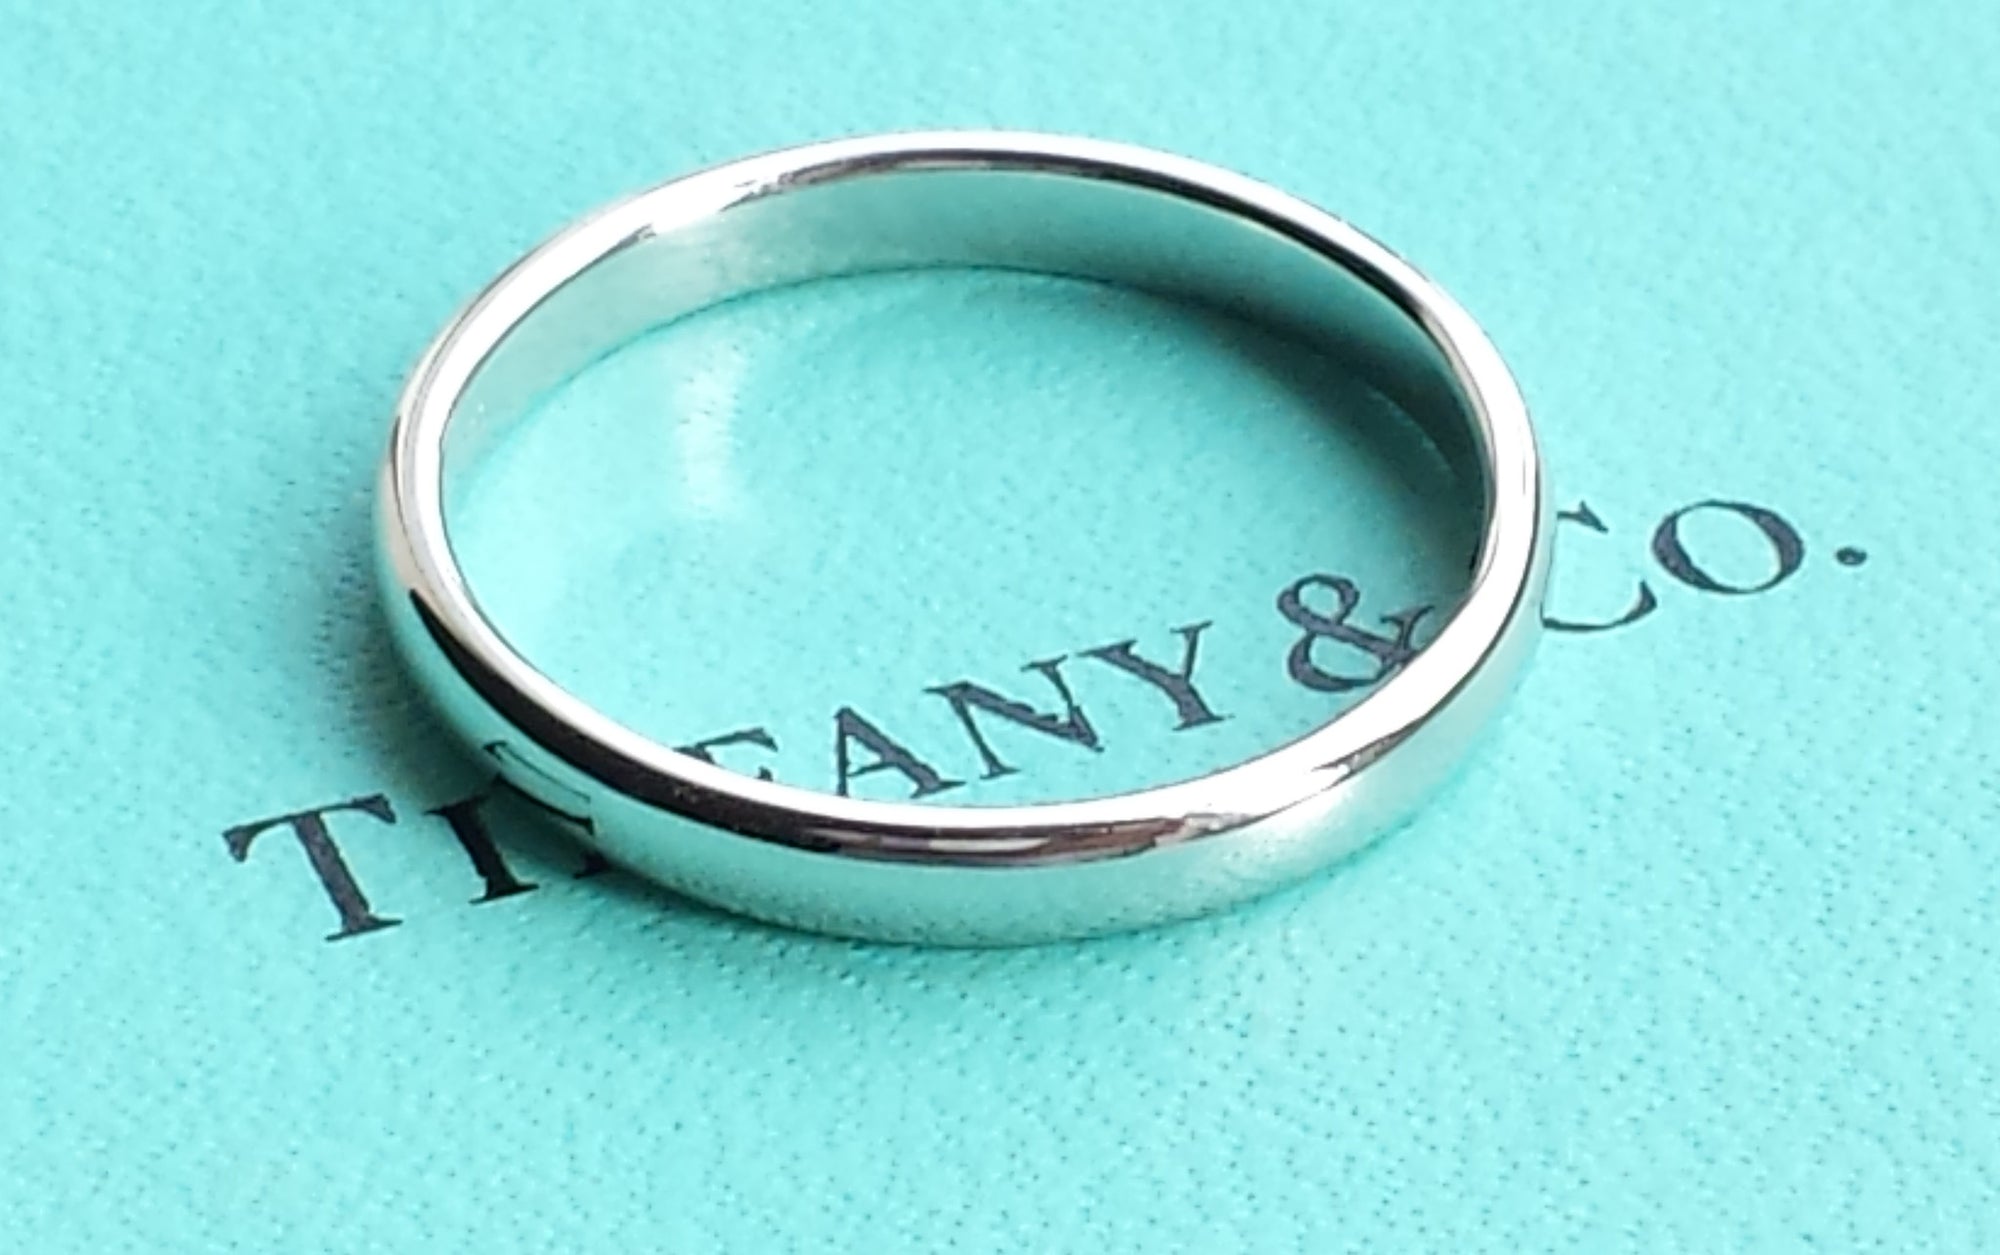 Tiffany & Co. Lucida 3mm Platinum Wedding Ring Size U